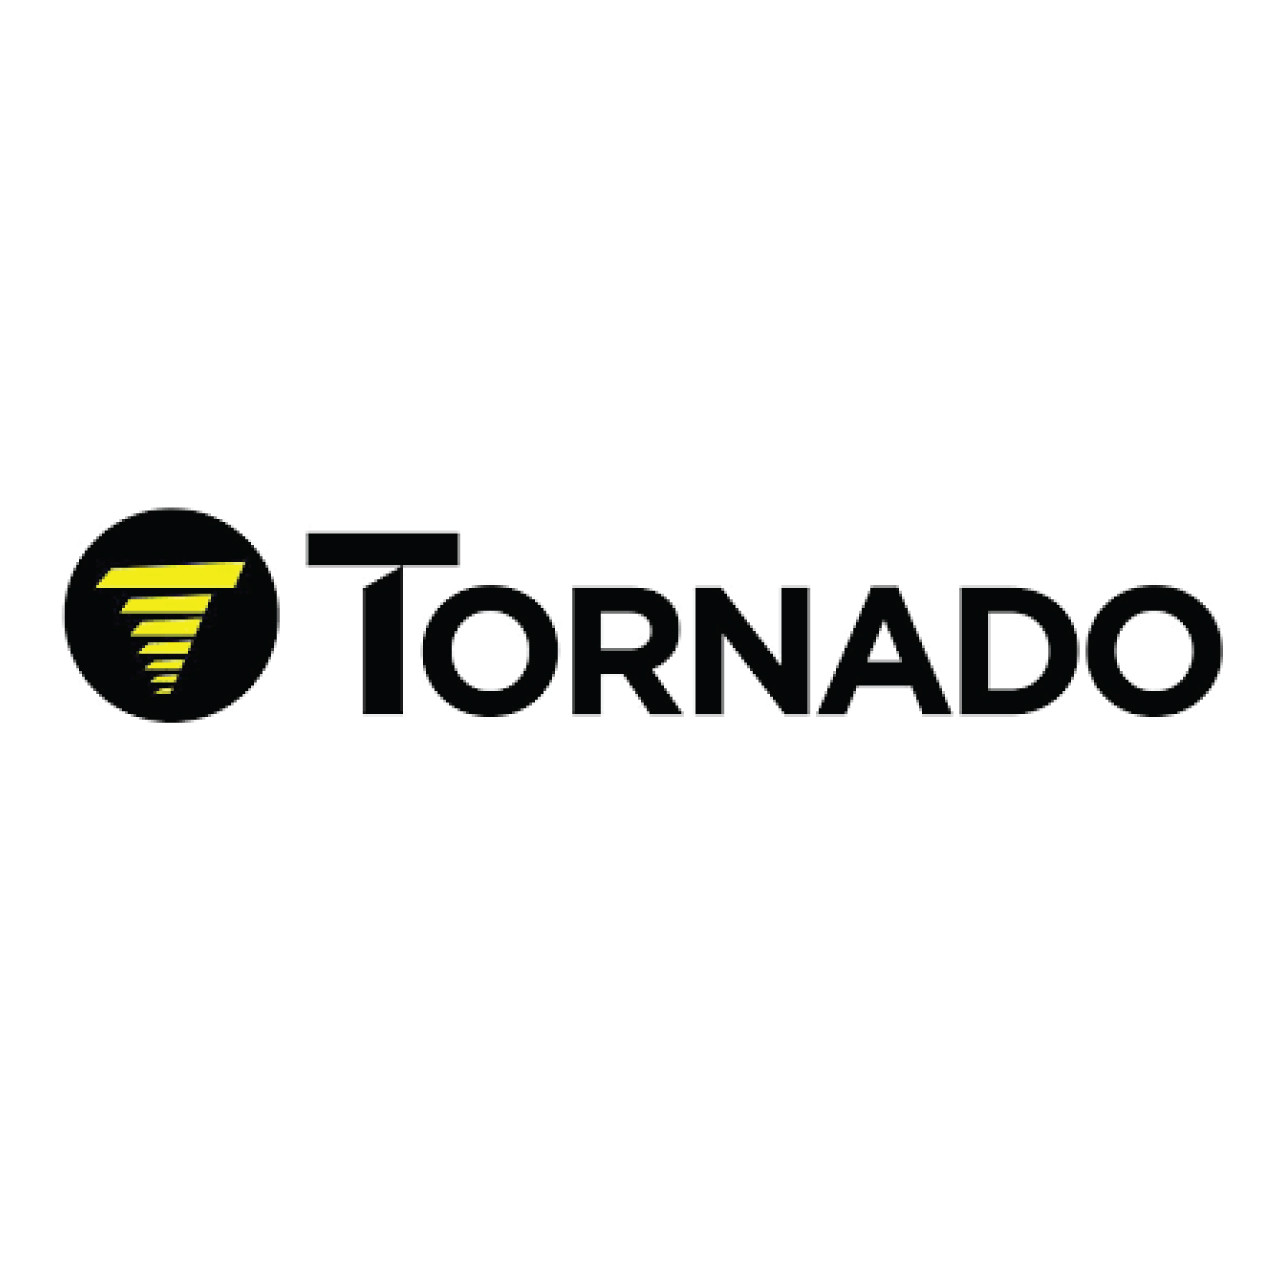 02-4543-0000, Tornado 02-4543-0000, Tornado SPIRAL PIN SS 6X35, Tornado parts